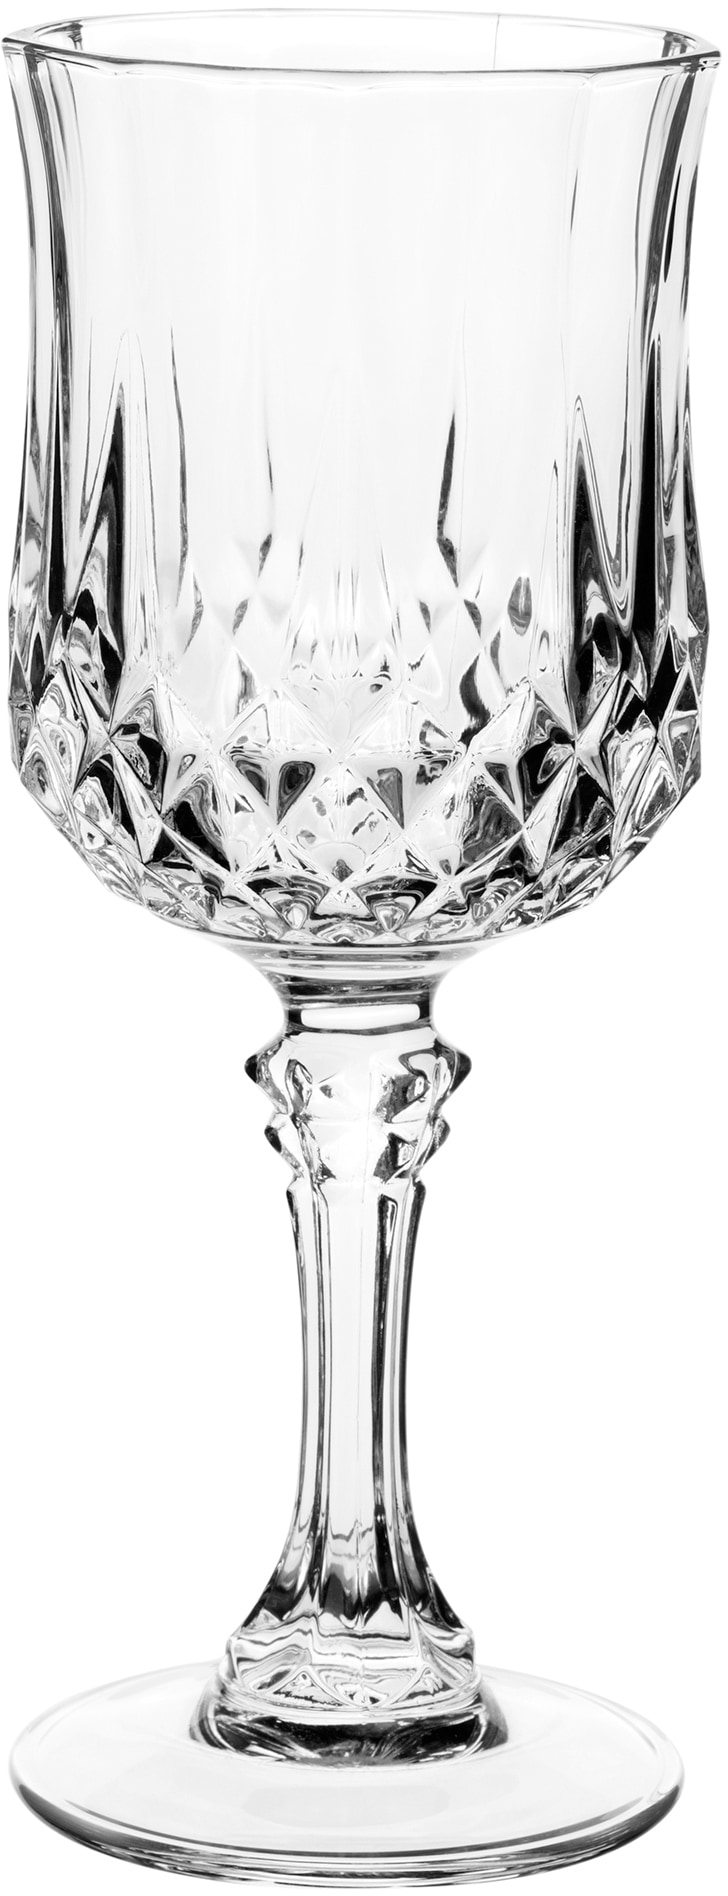 ECLAT Weinglas »Longchamp«, (Set, 6 tlg.), 6-teilig, 170 ml, Made in France